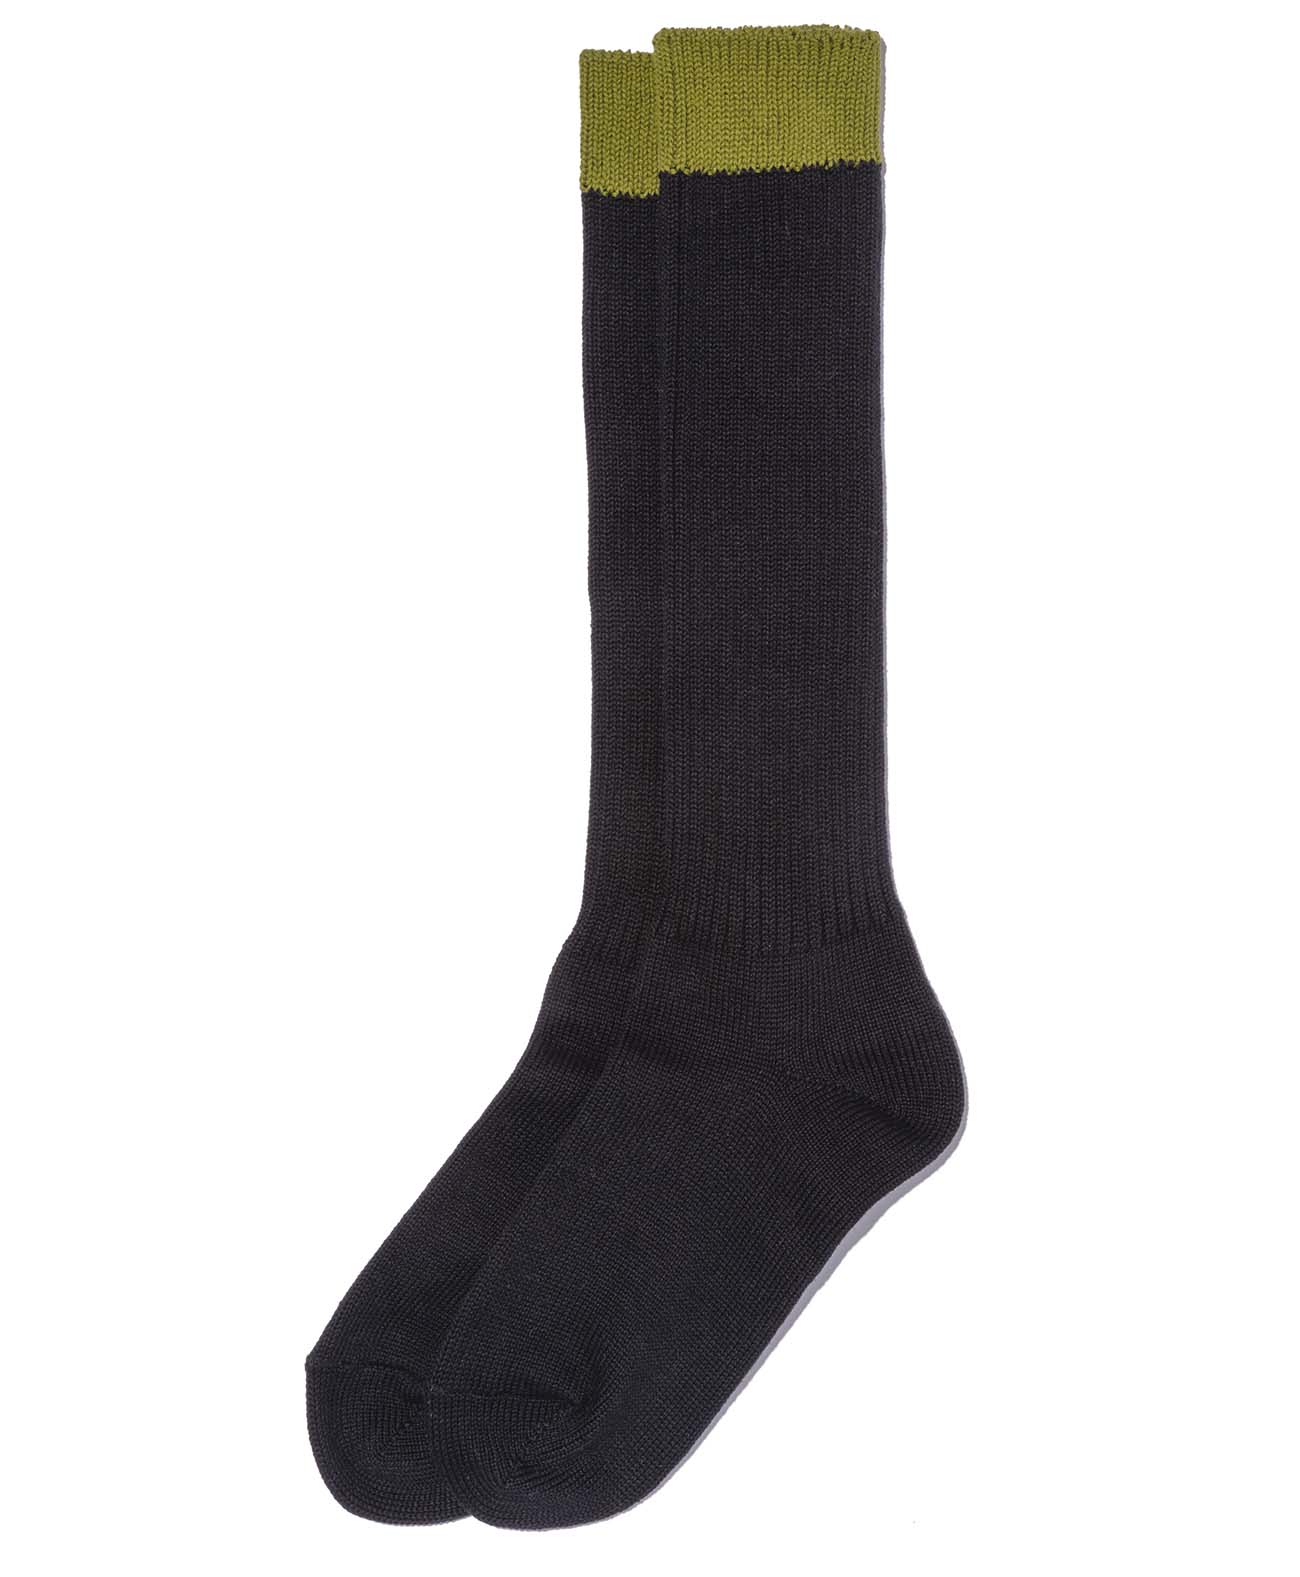 Botas calcetines / negro / caqui (mujer)